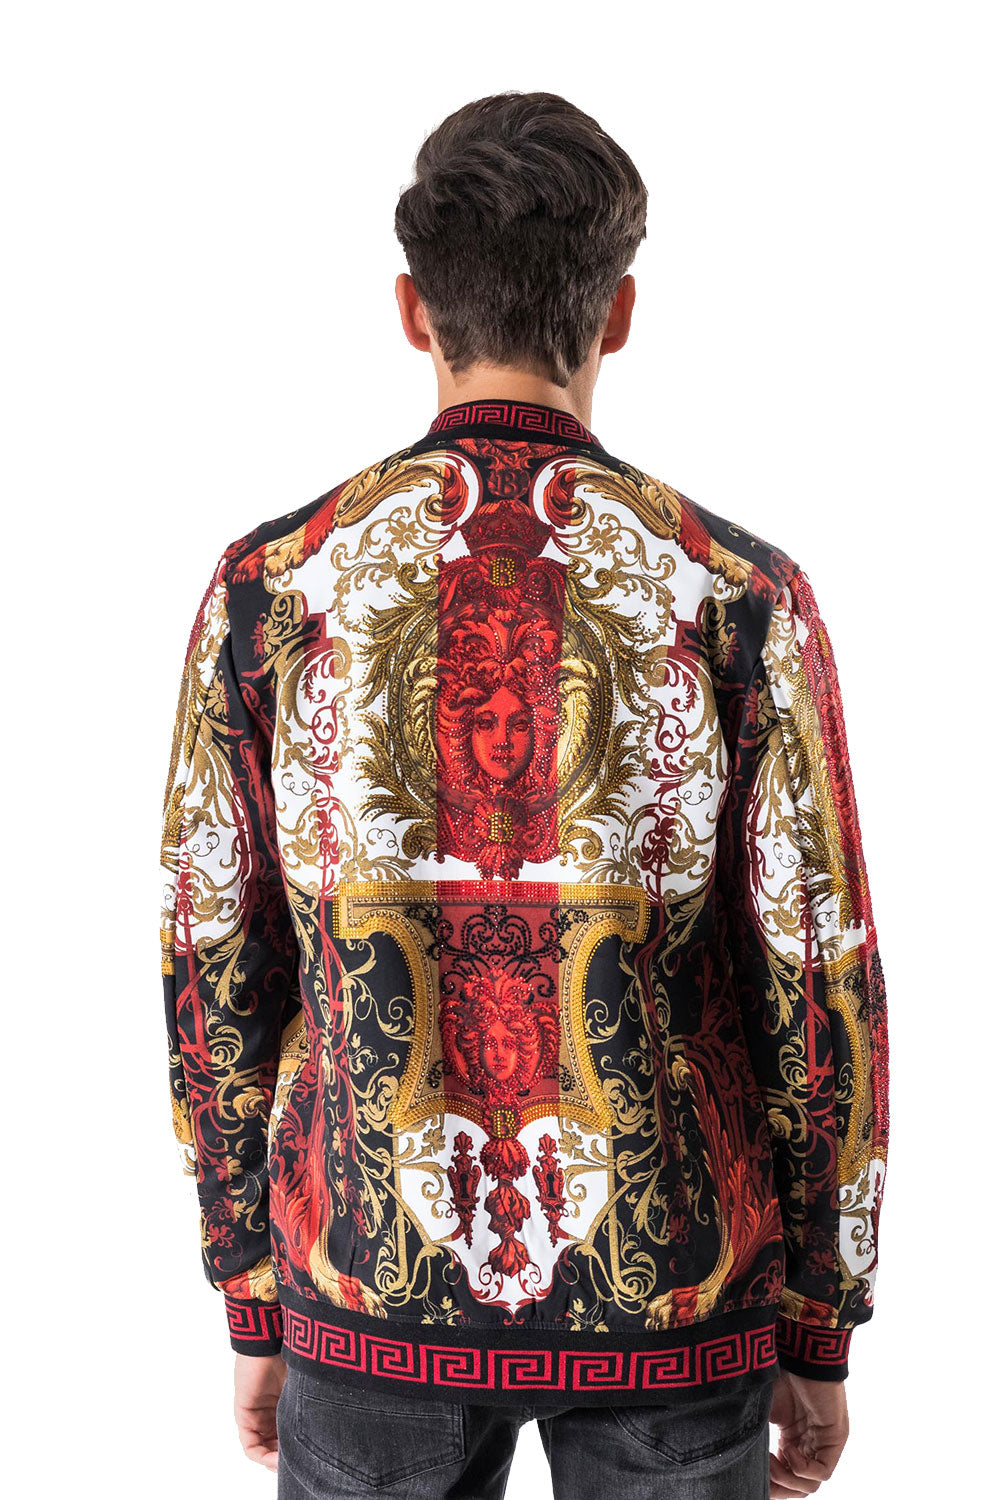 BARABAS Men's Rhinestone Medusa Greek Pattern Floral Jacket BP655 Red